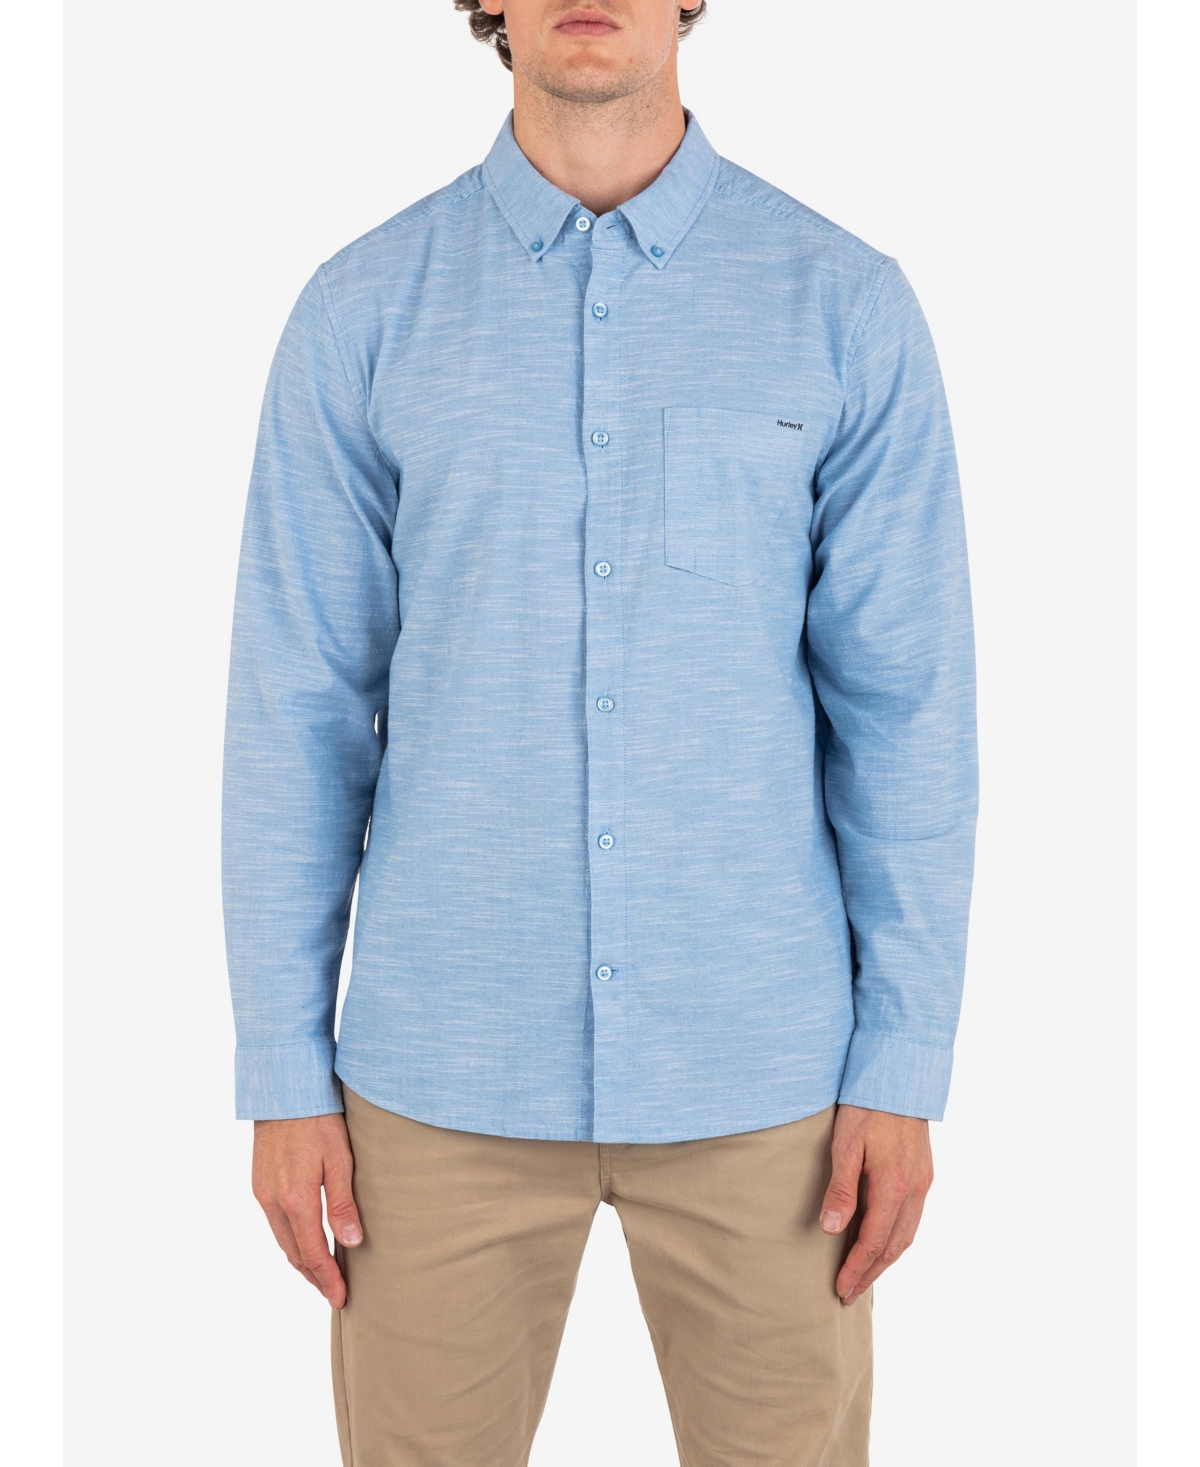 Men's Oao Stretch Long Sleeve Shirt - Blue Oxford